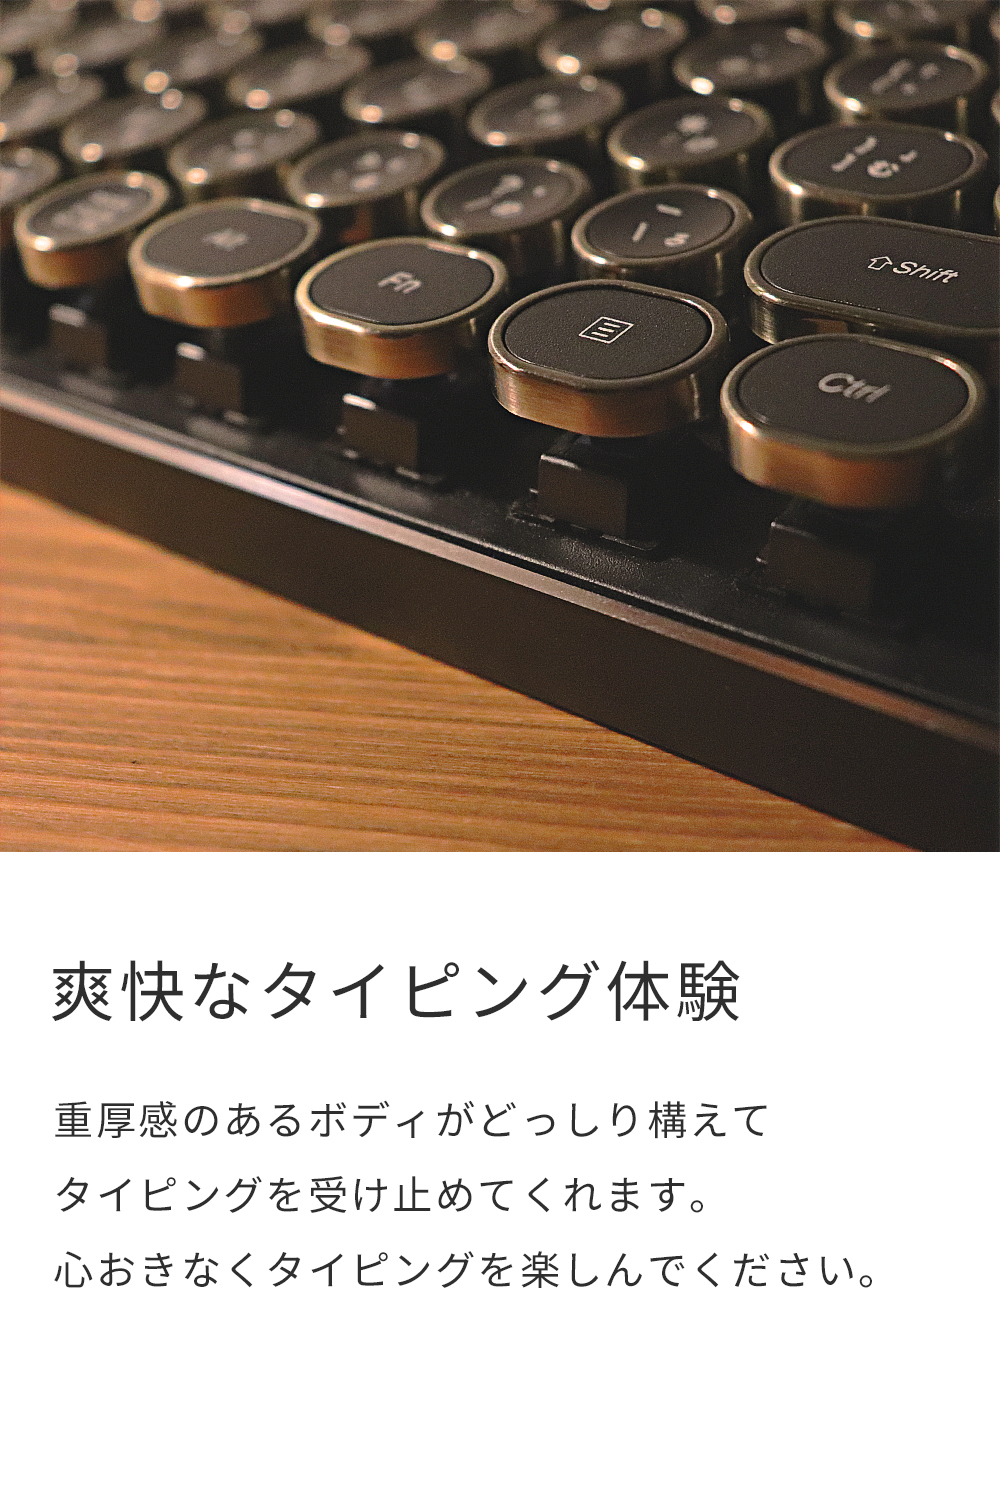 HKW. タイプライター風メカニカルキーボード キーボード 有線 Keyboard メカニカルキーボード 有線キーボード テンキー 角度調節  テレワーク キーボード 青軸 JIS規格 109キー USB有線 日本語キーボード 日本語配列  アンティーク風  :  nico.Technology